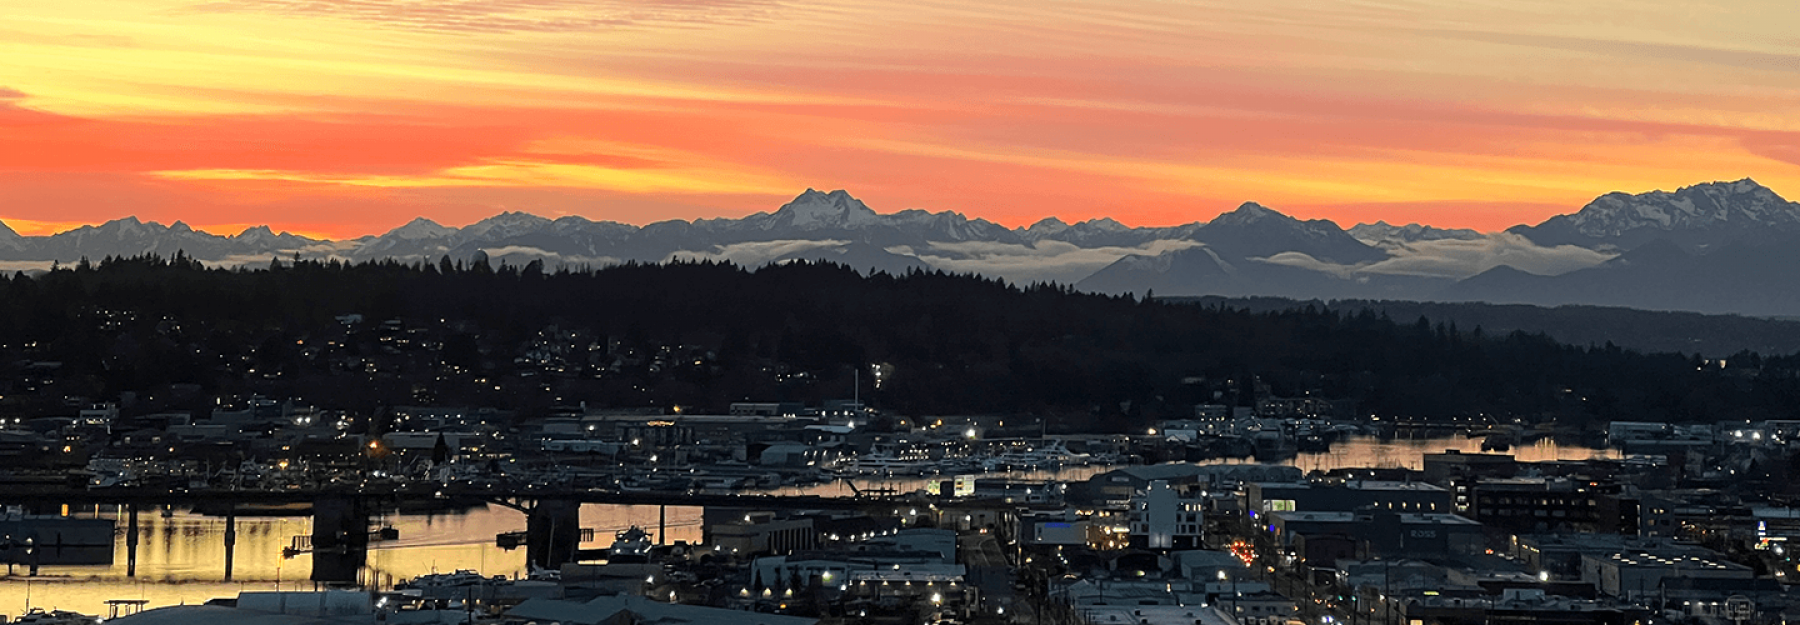 View of Olympic mountains and Ballard, Washington